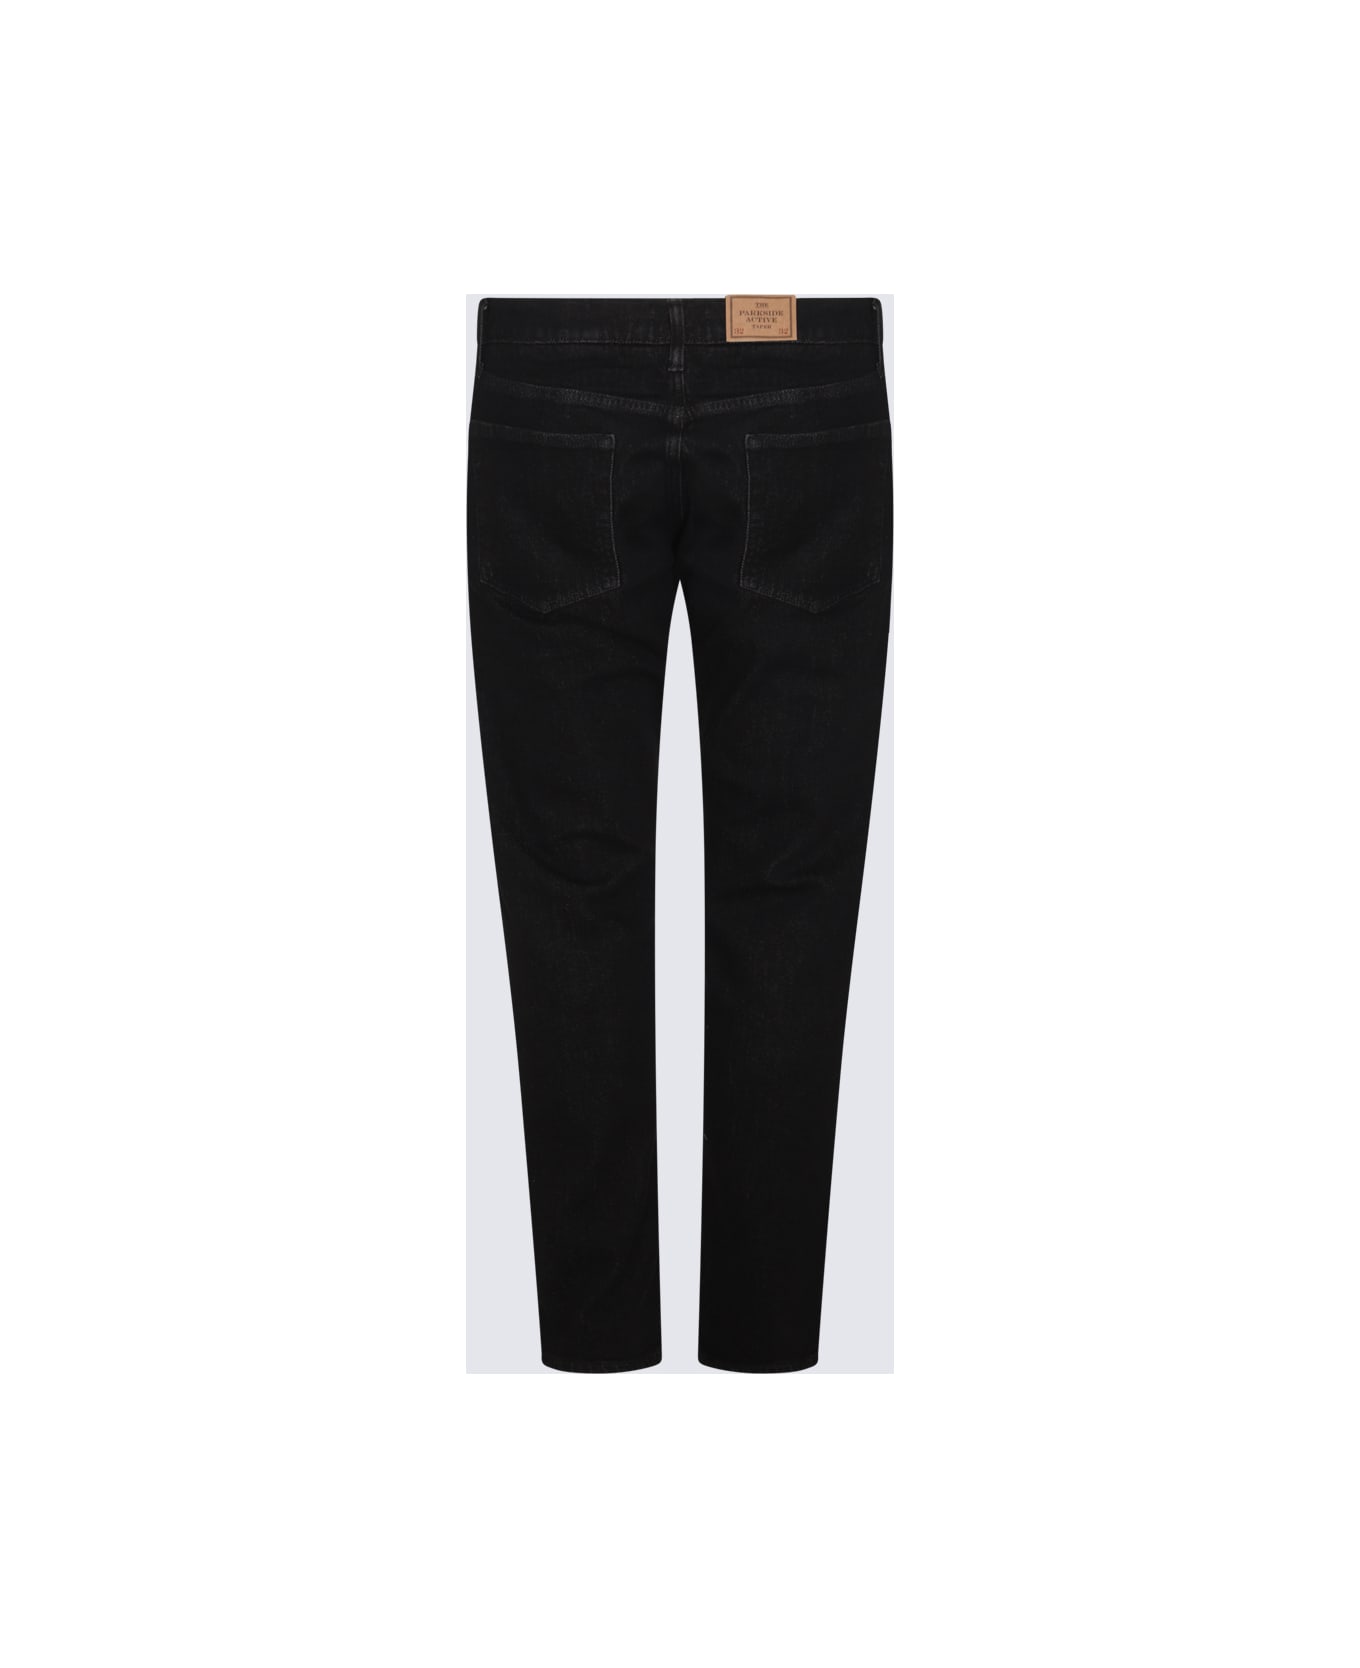 Polo Ralph Lauren Black Cotton Denim Jeans - HARRIS V2 デニム